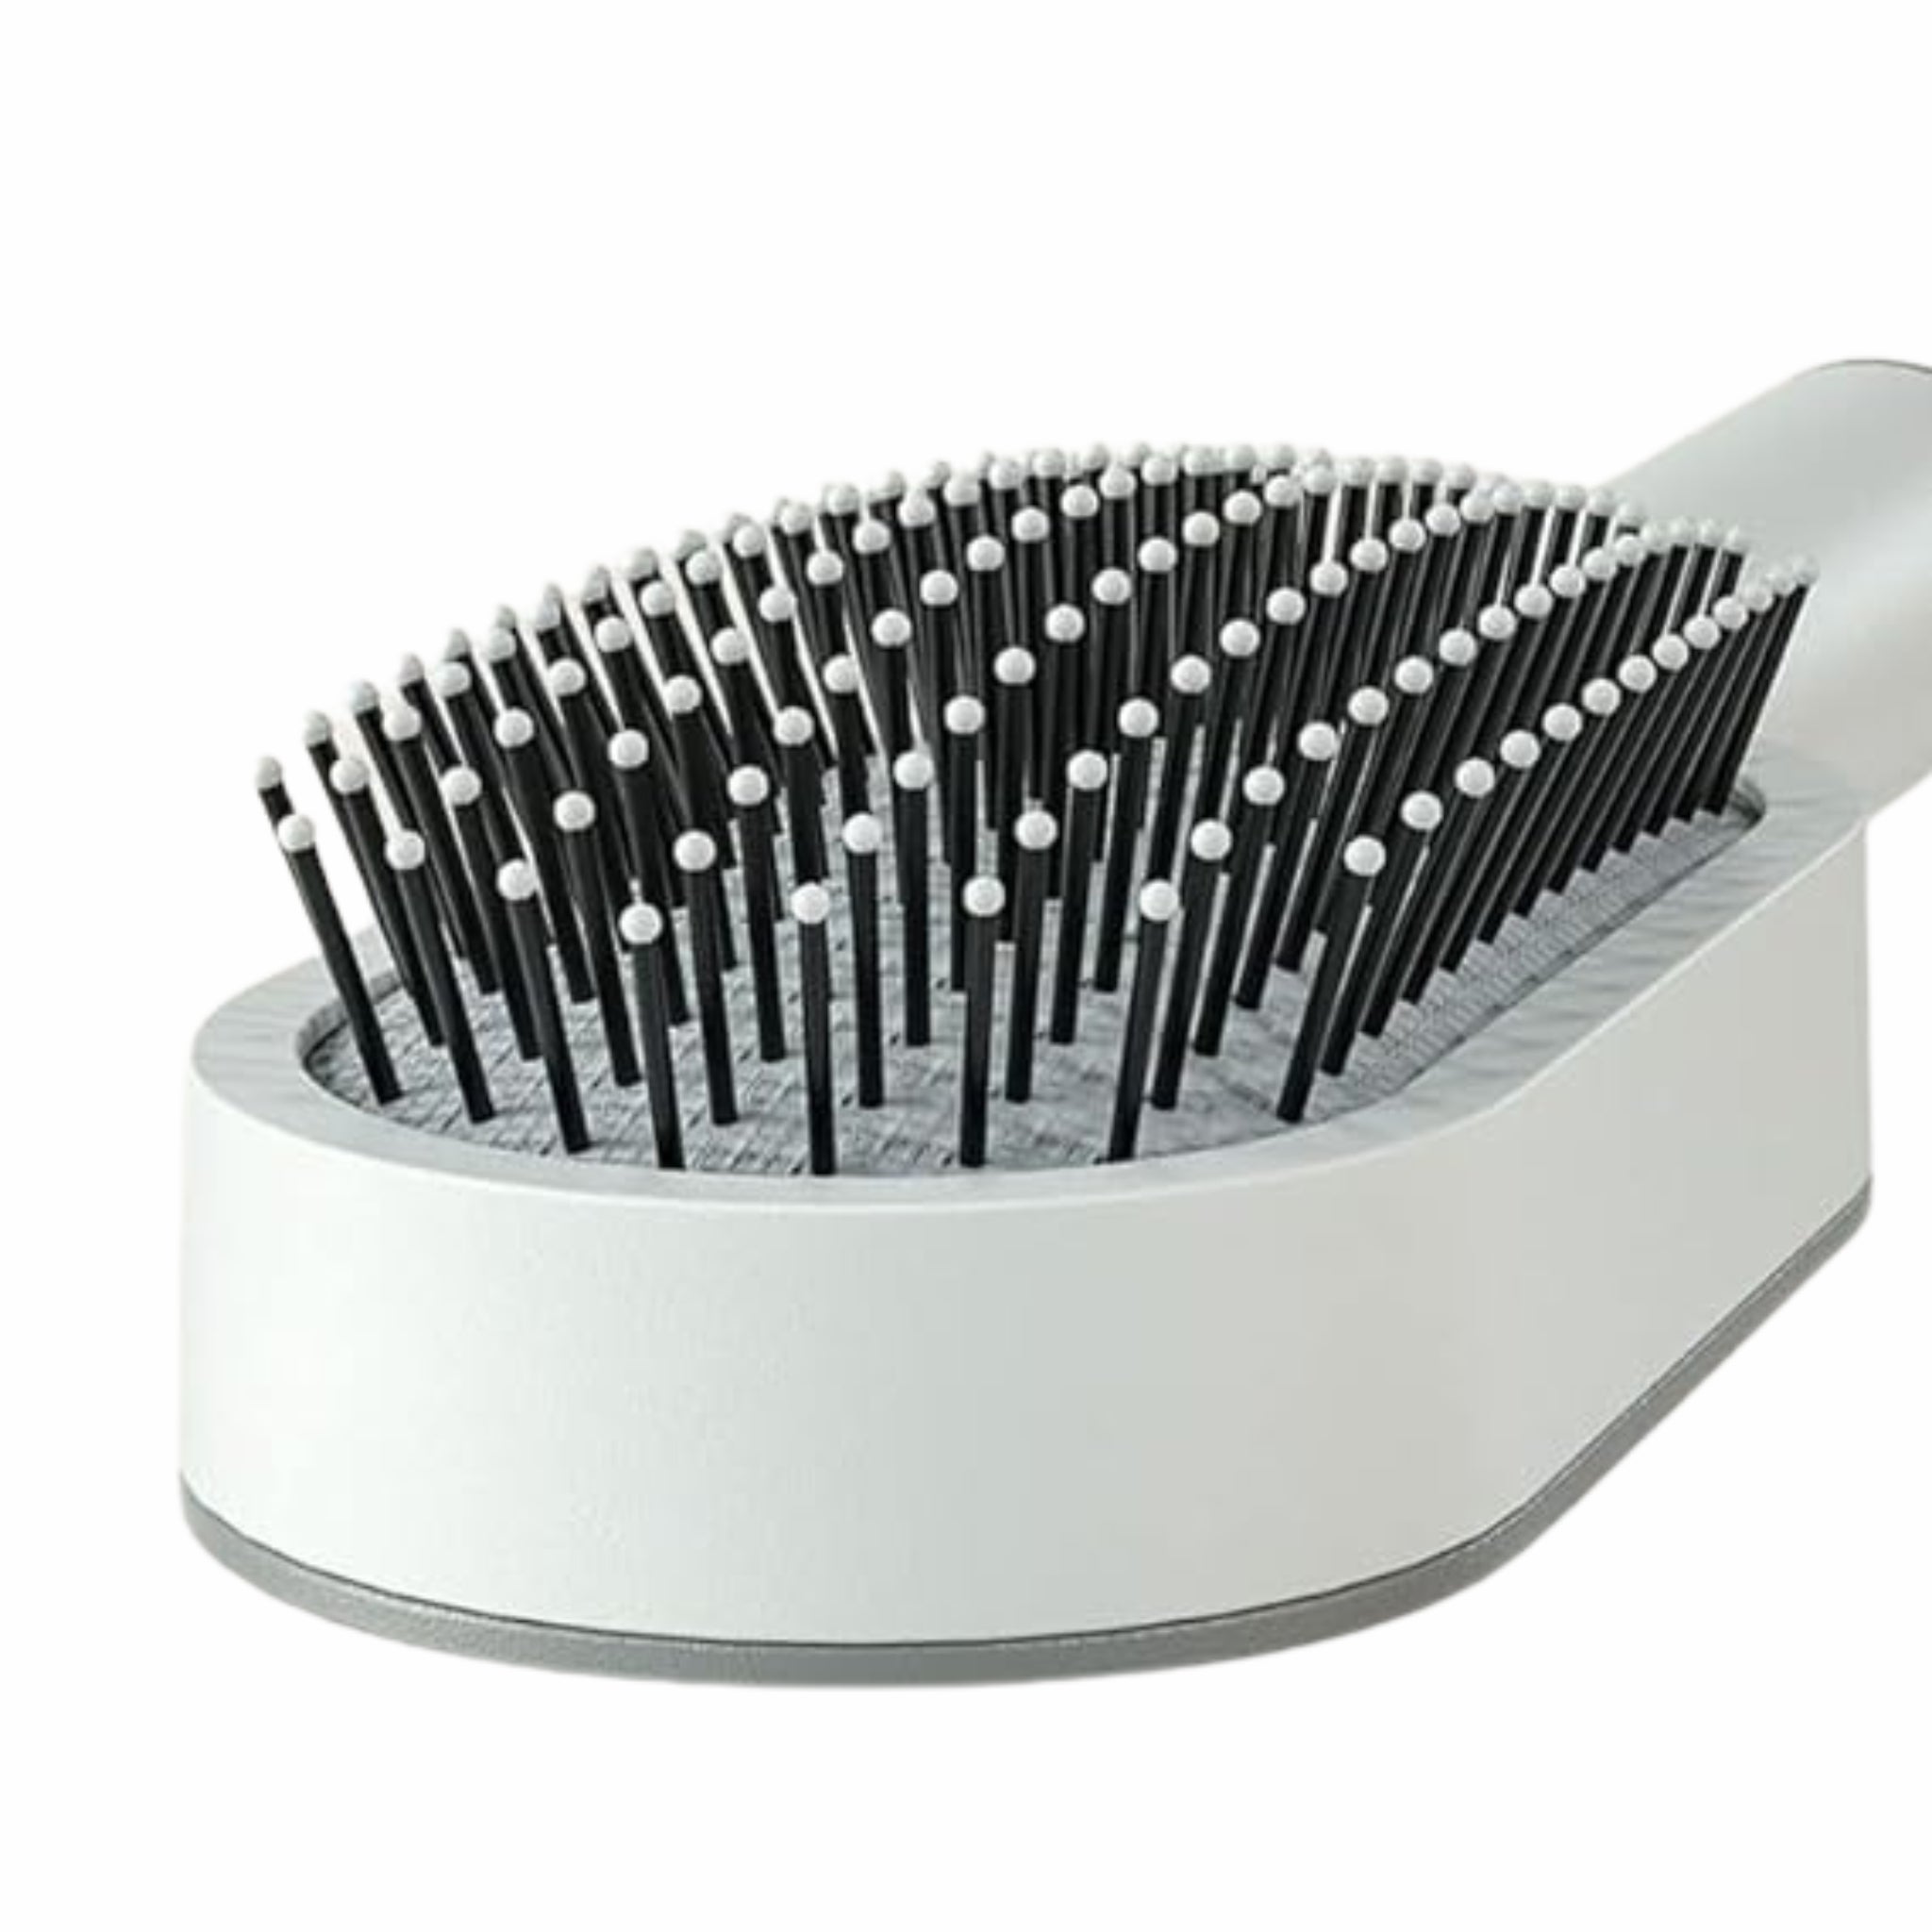 HPC HB-1 Self-cleaning 3D Hair Brush